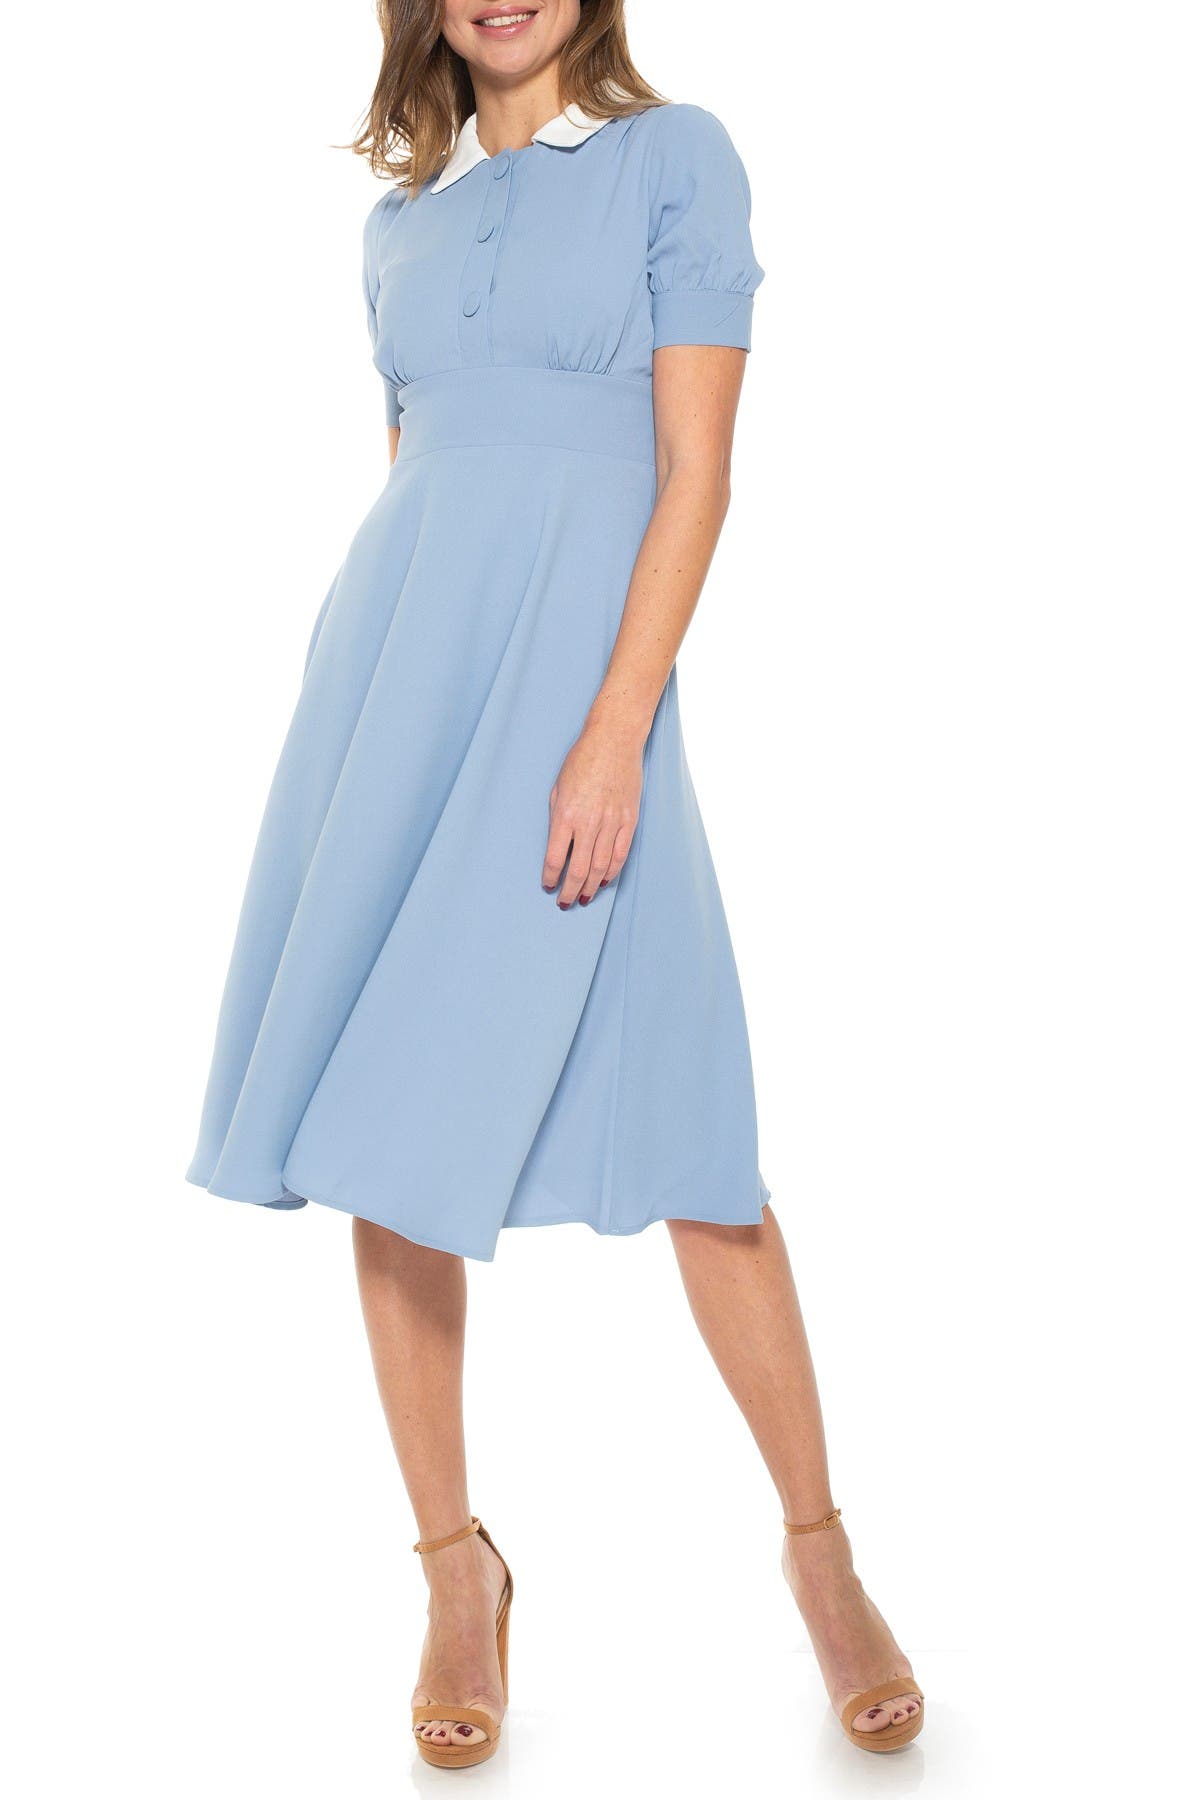 Alexia Admor Printed Spread Collar Midi Dress In Medium Blue2